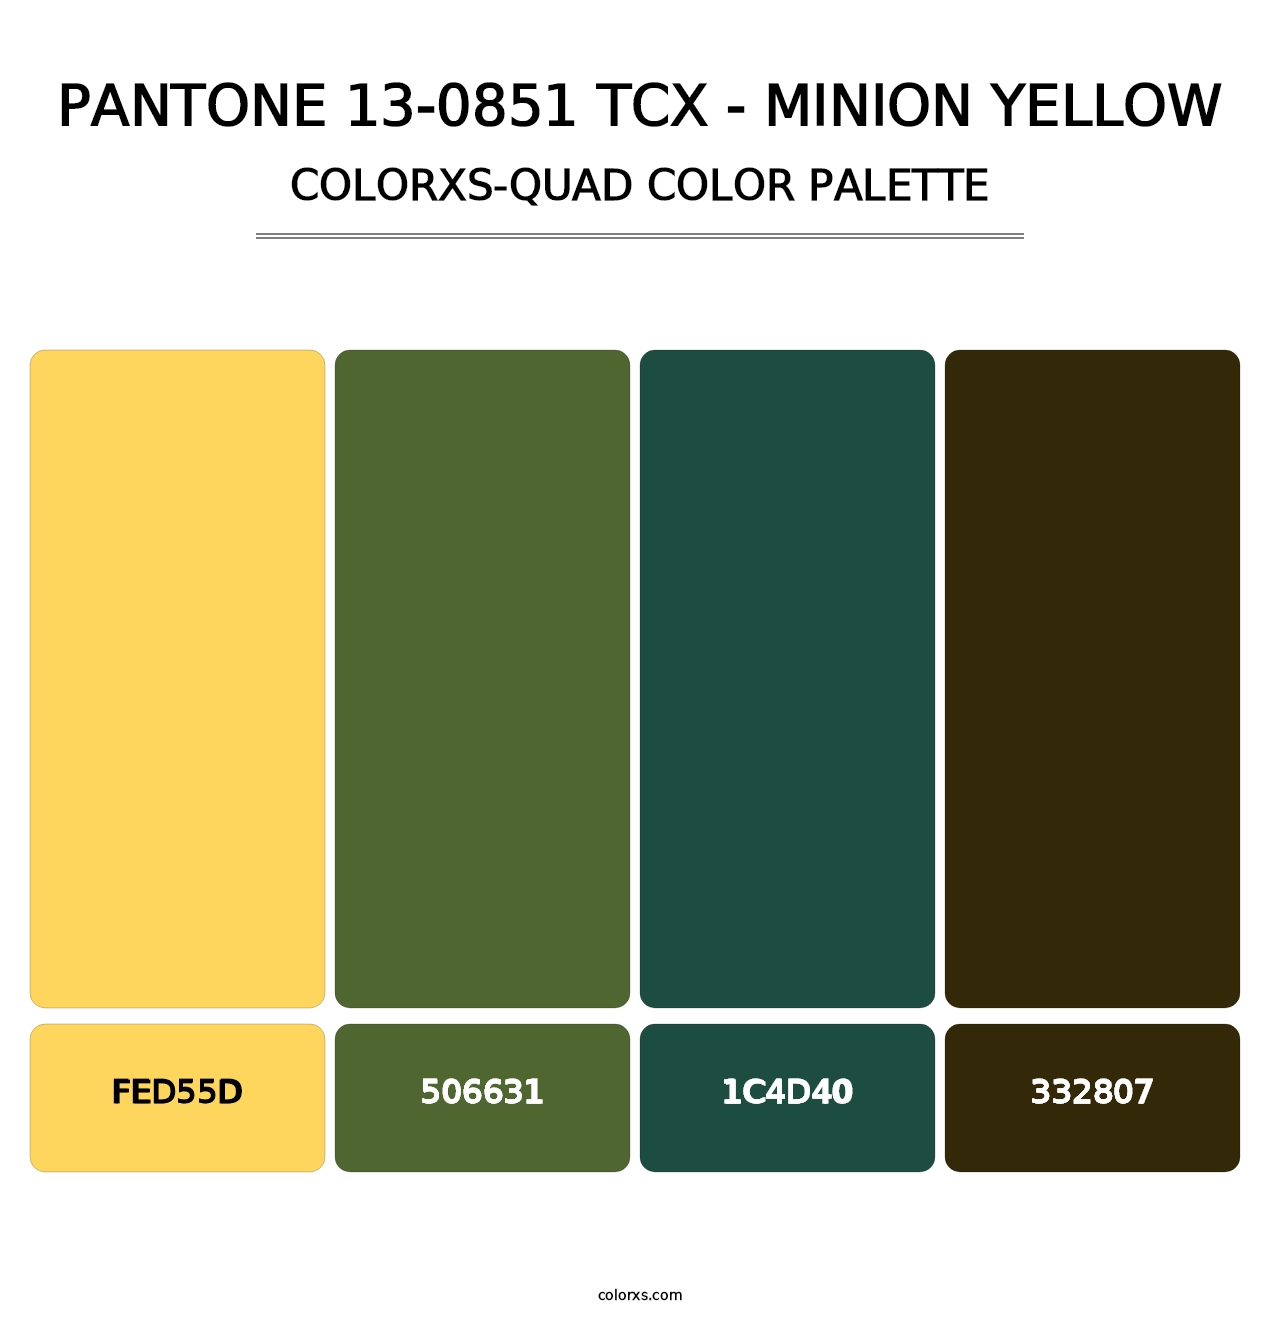 PANTONE 13-0851 TCX - Minion Yellow - Colorxs Quad Palette